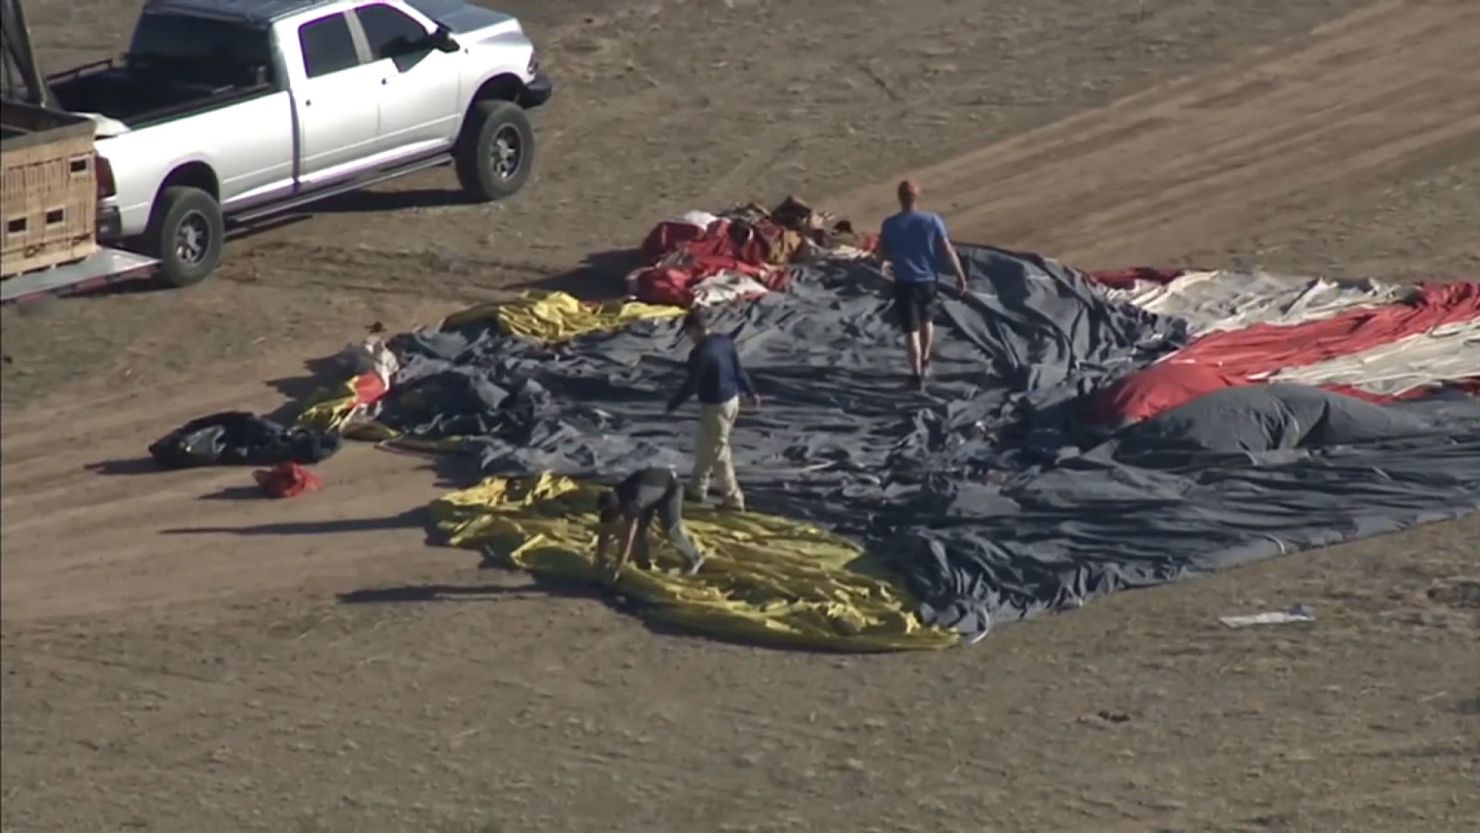 Hot air balloon crash kills 4 in Arizona desert